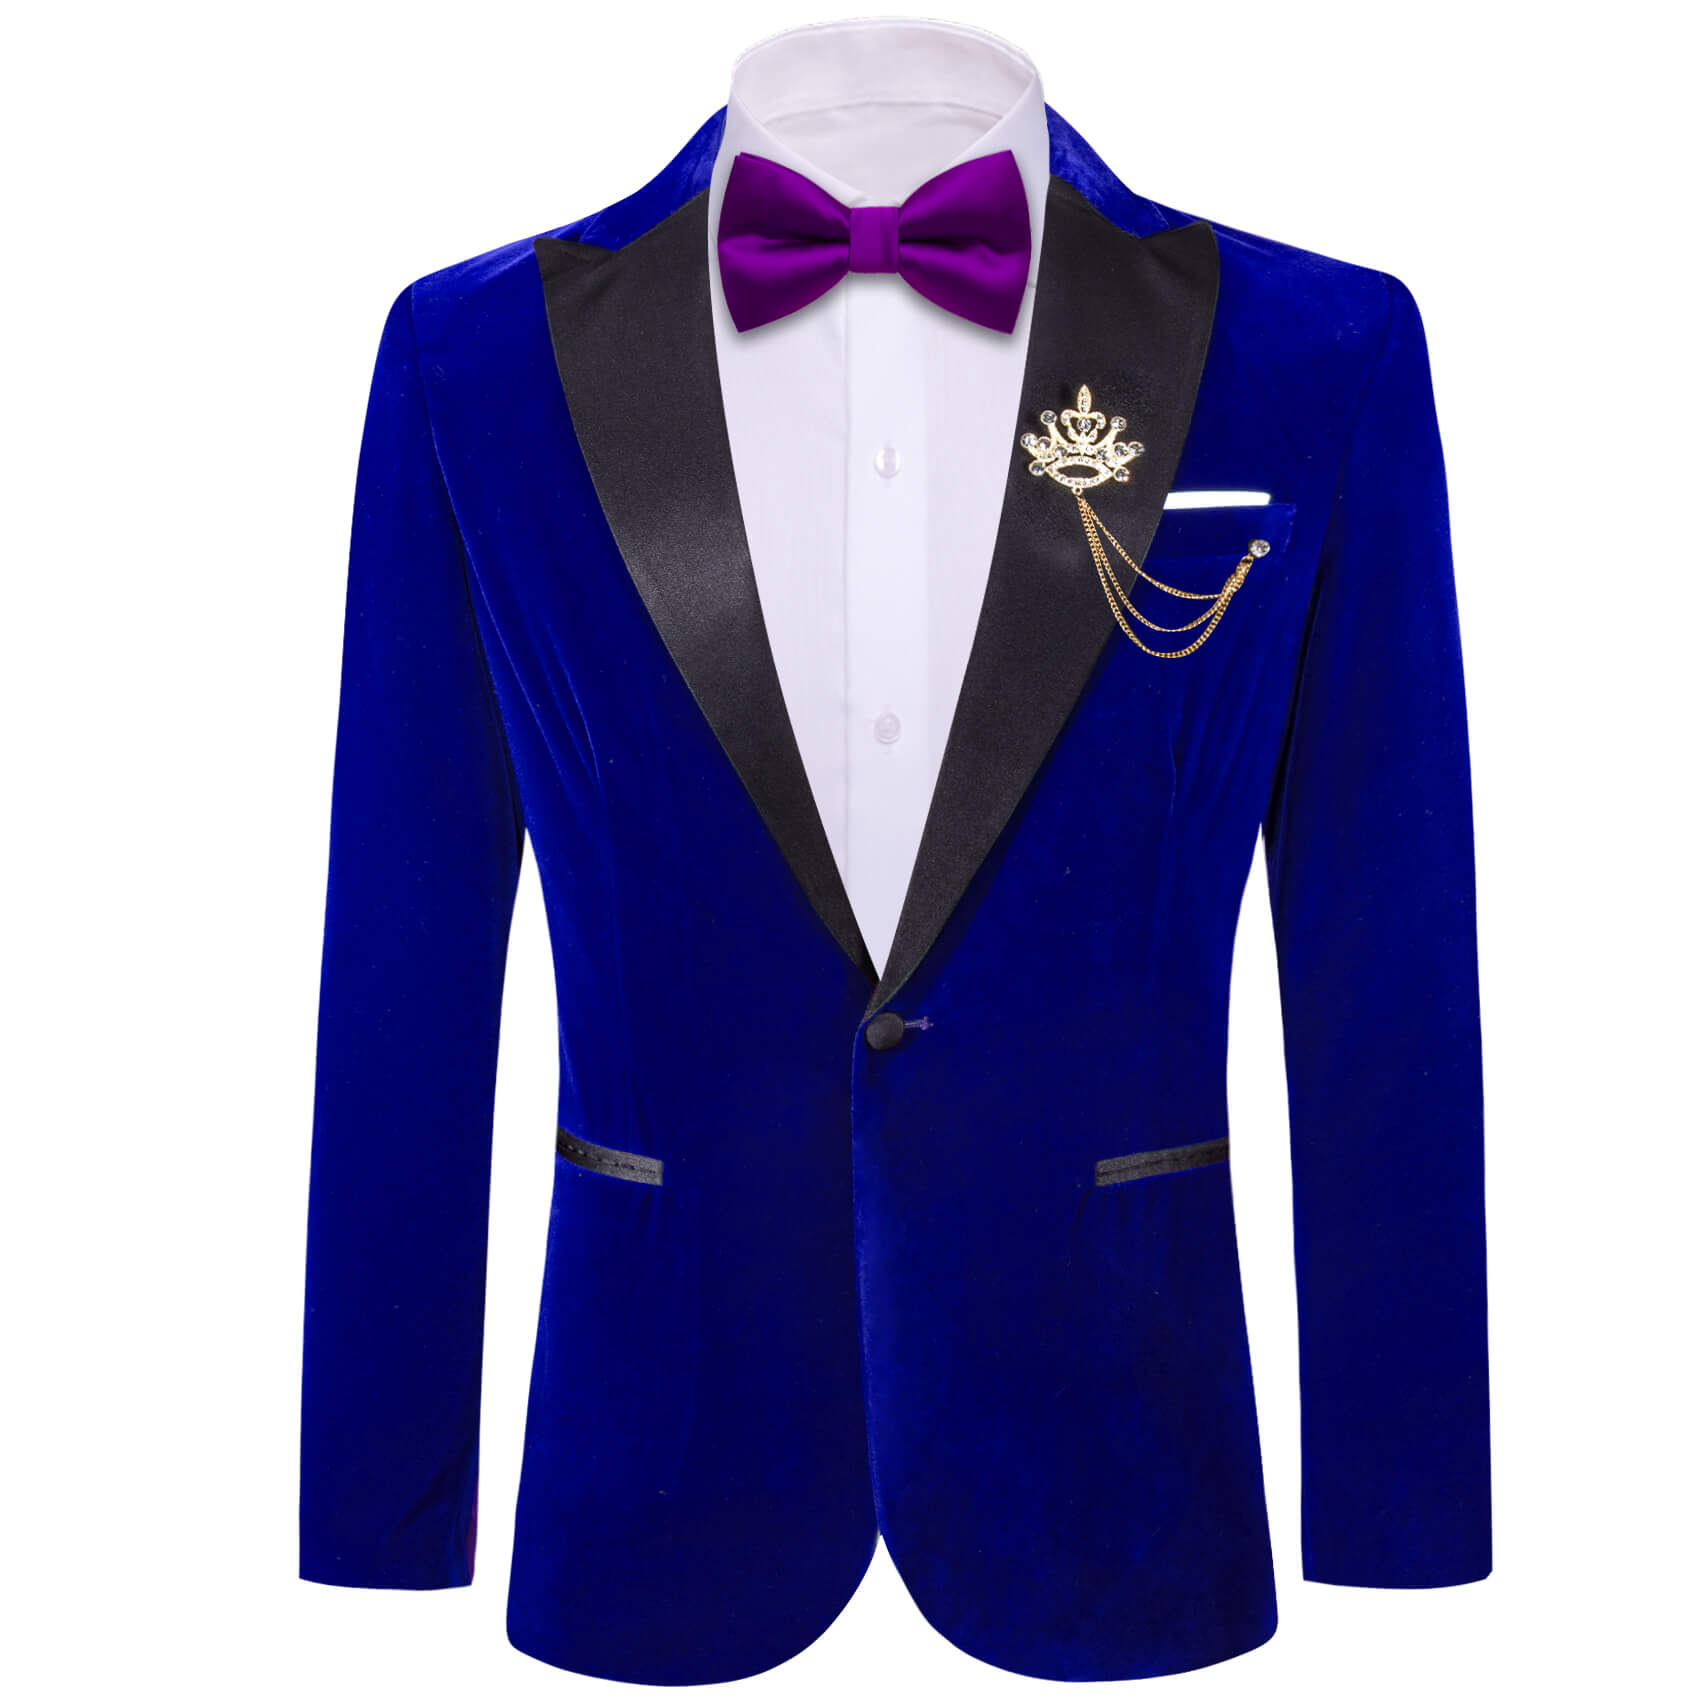  Navy Blue Solid Silk Peak Collar Suit